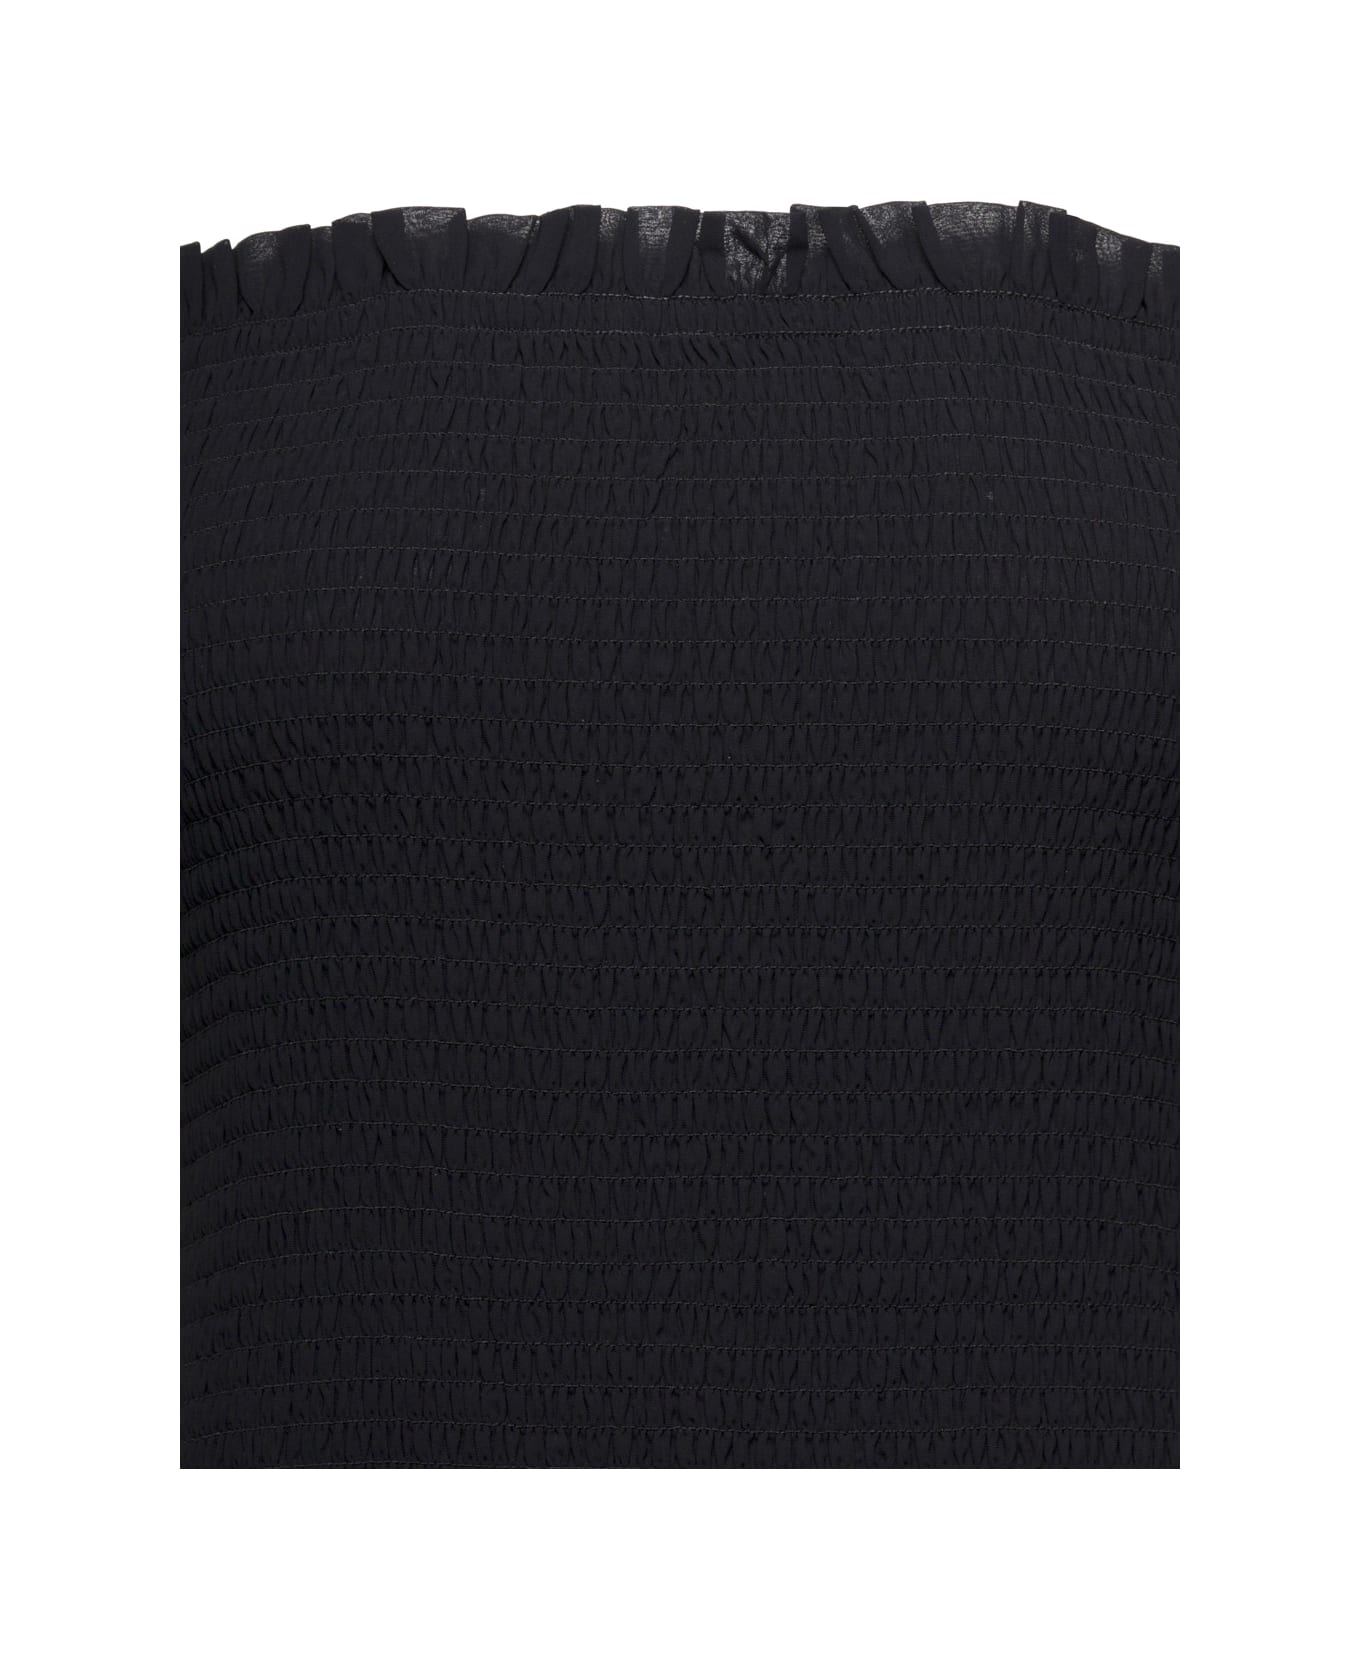 Rotate by Birger Christensen Black 'arabella' Tiered Maxi Dress In Chiffon Woman - Black